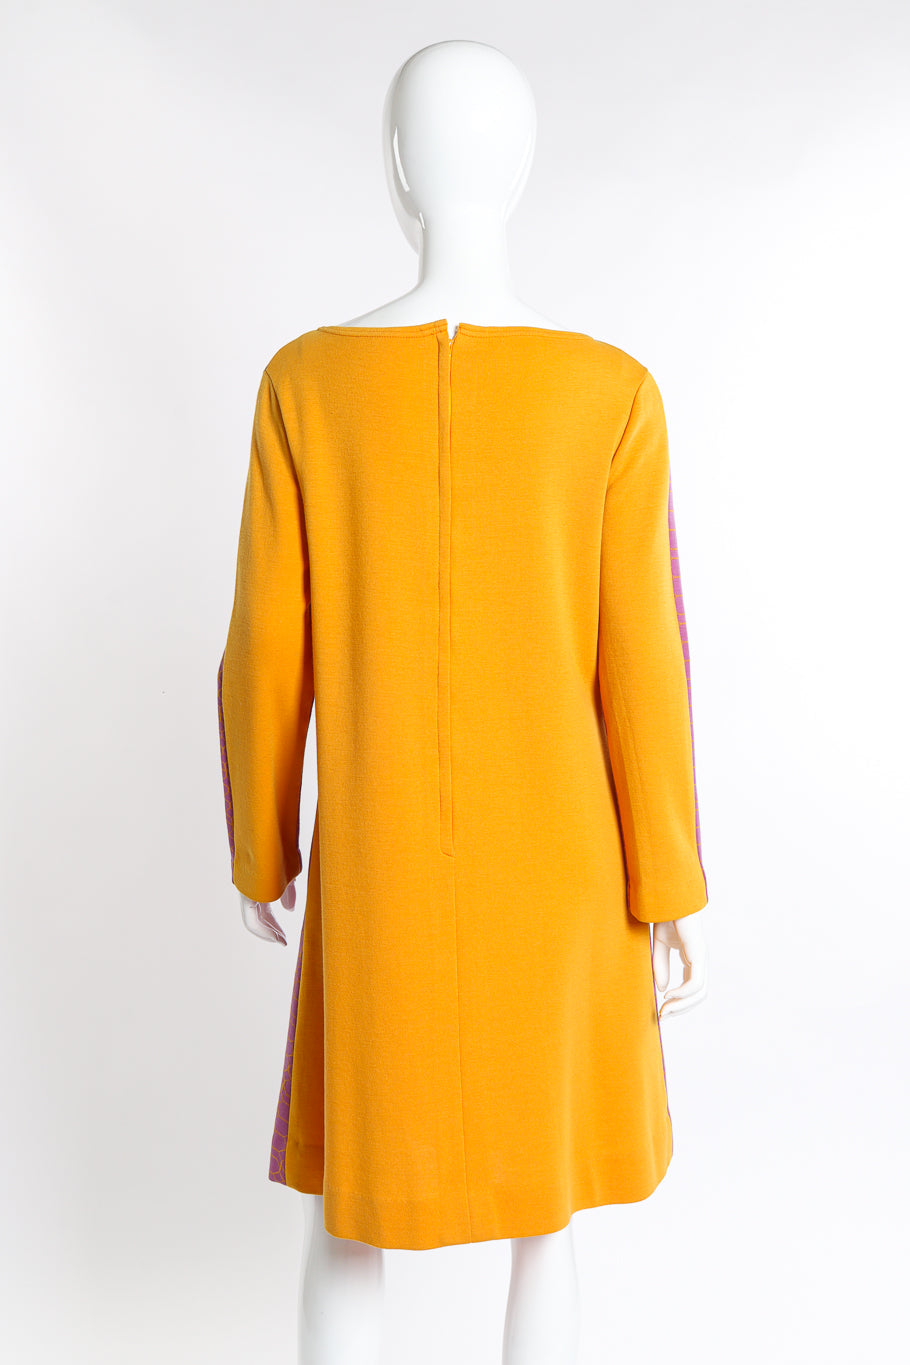 Vintage Rudi Gernreich Honeycomb Print Knit Dress back on mannequin closeup @recess la